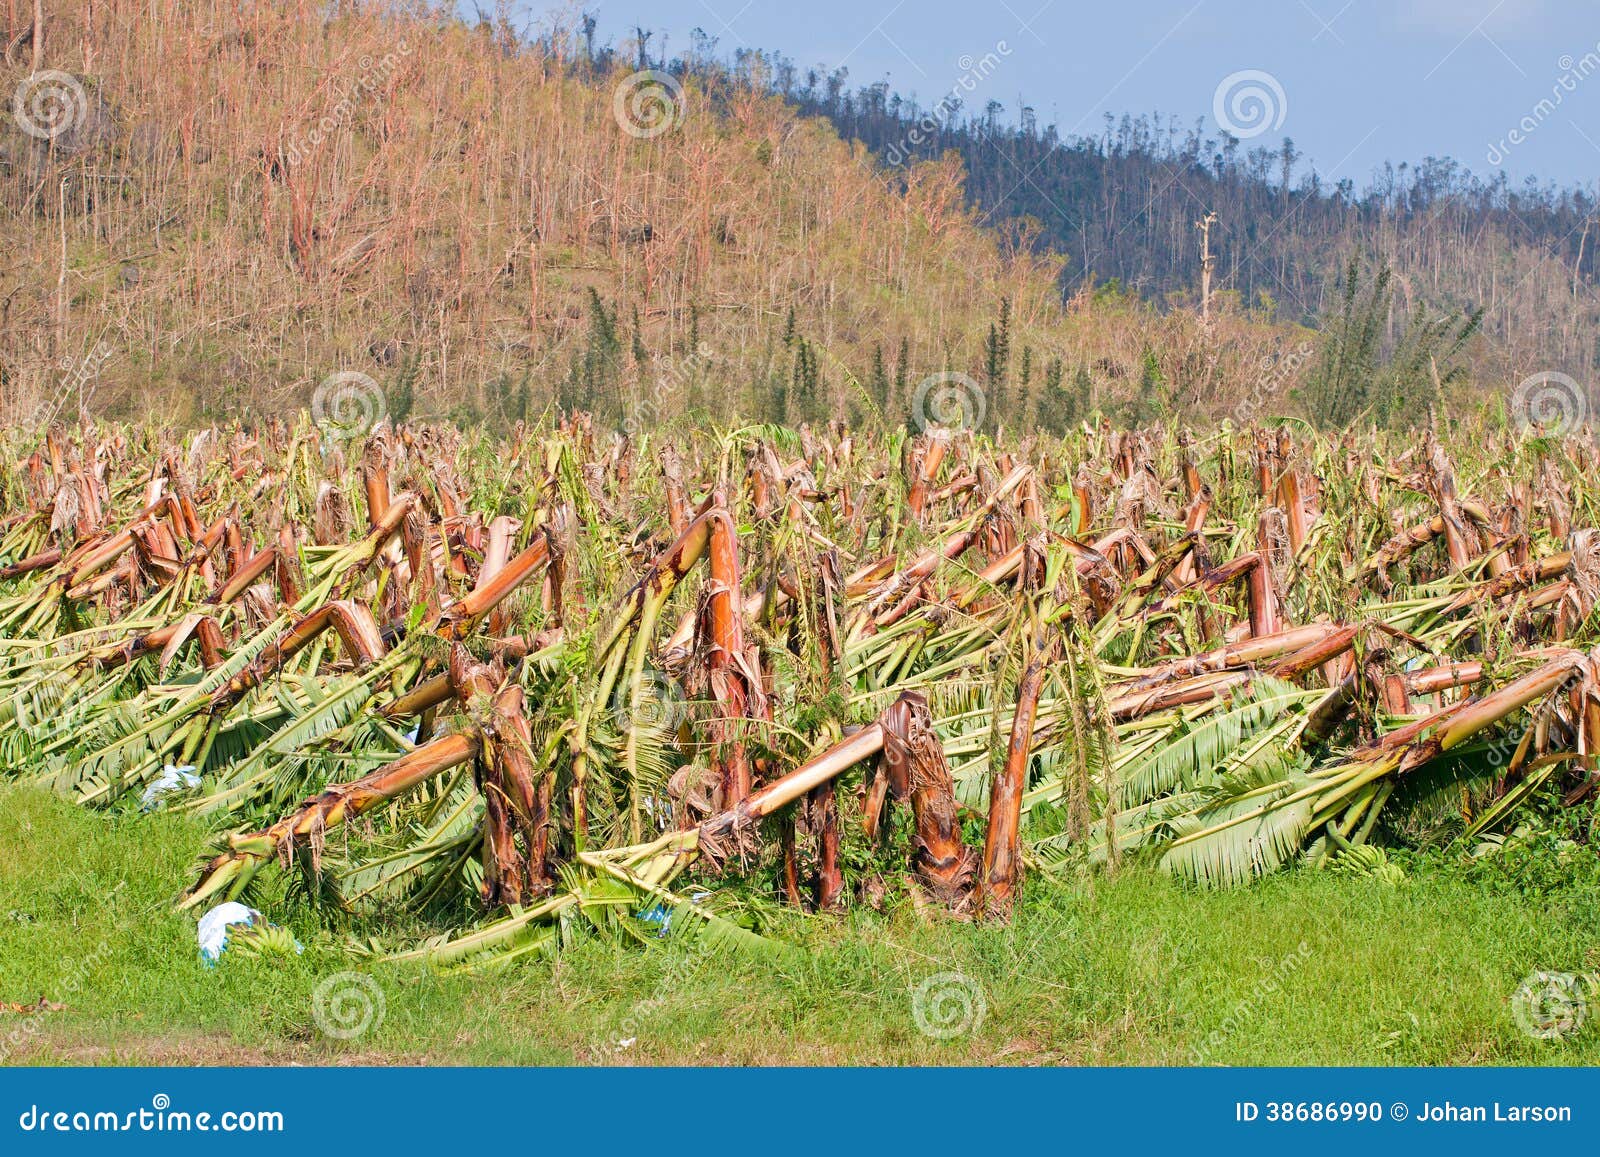 banana plantation destroyed by cyclone